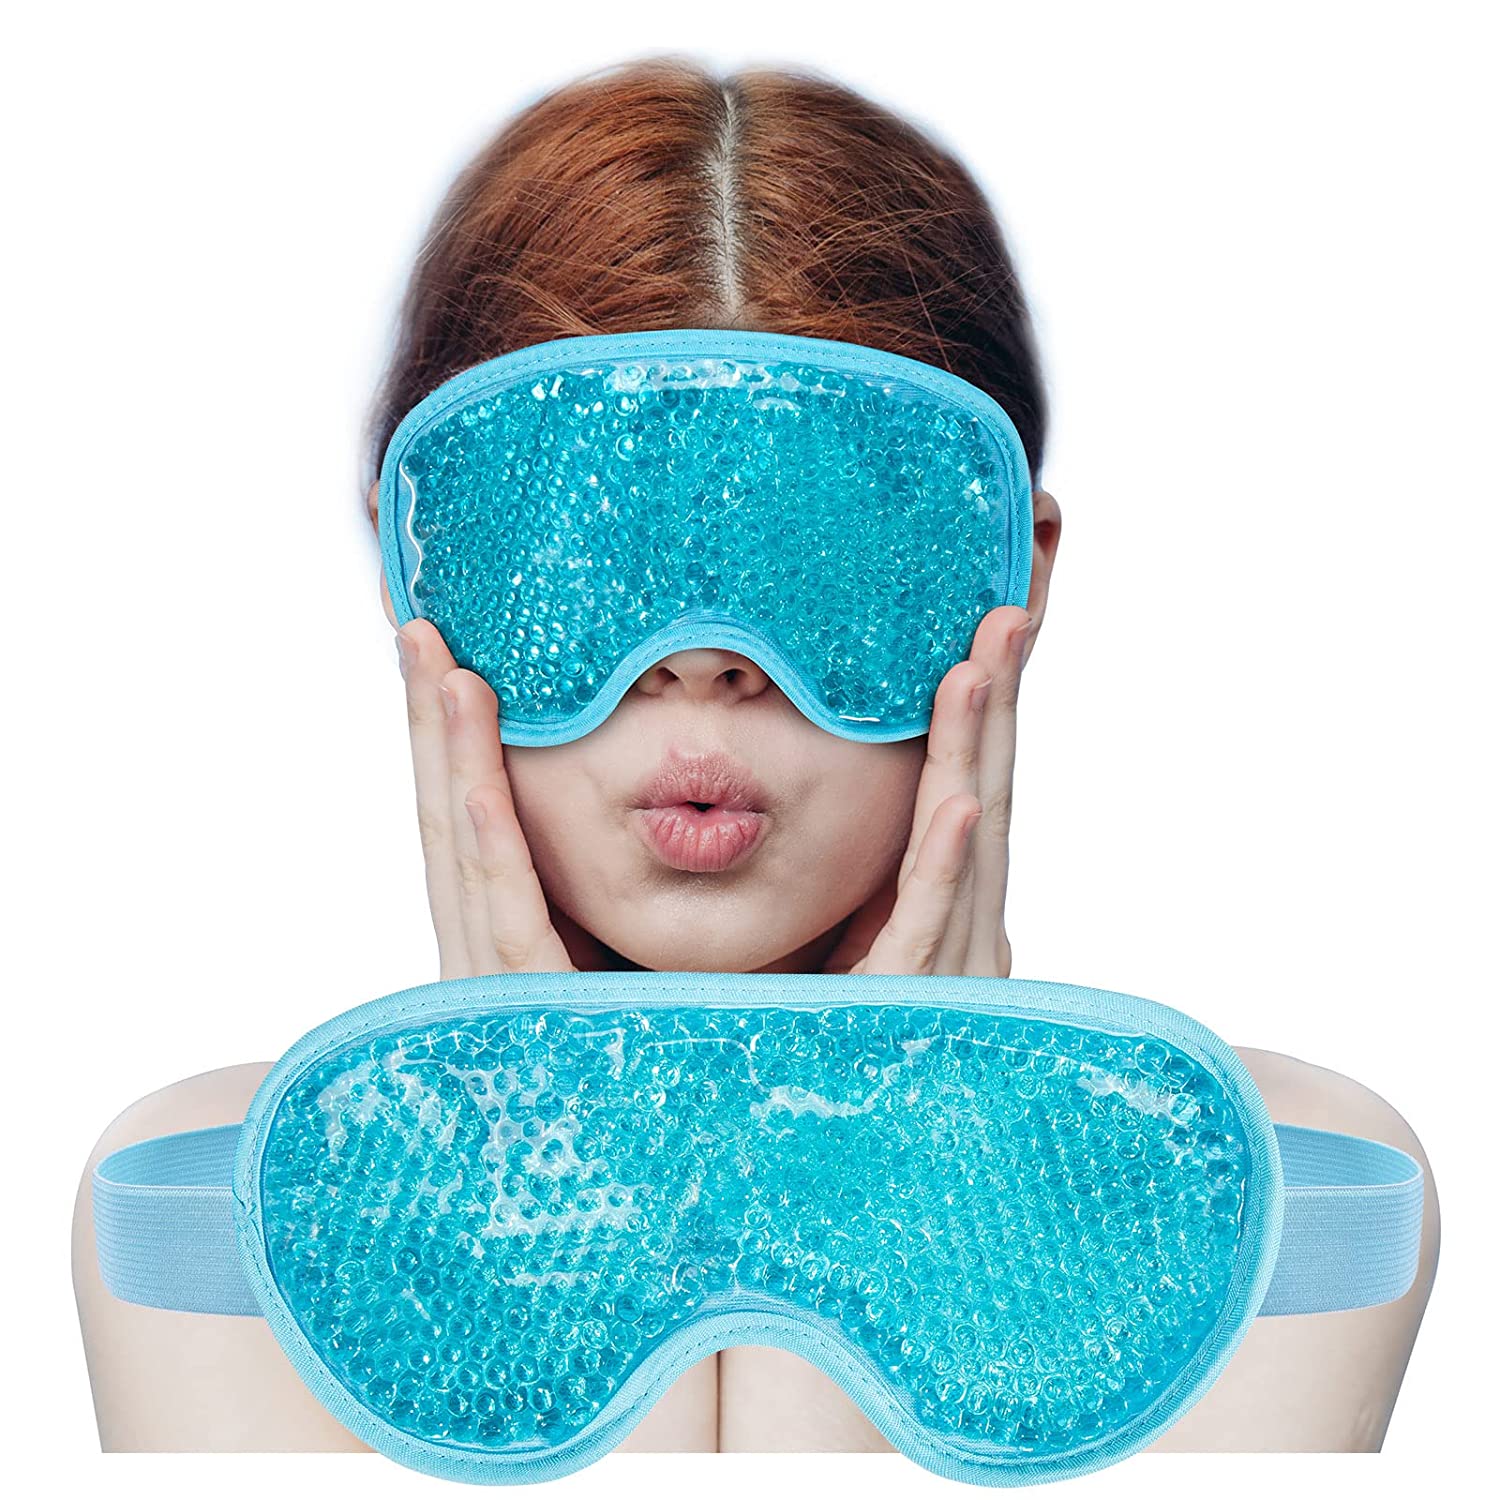 J JIMOO Freezer Friendly Odor-Free Cooling Eye Mask